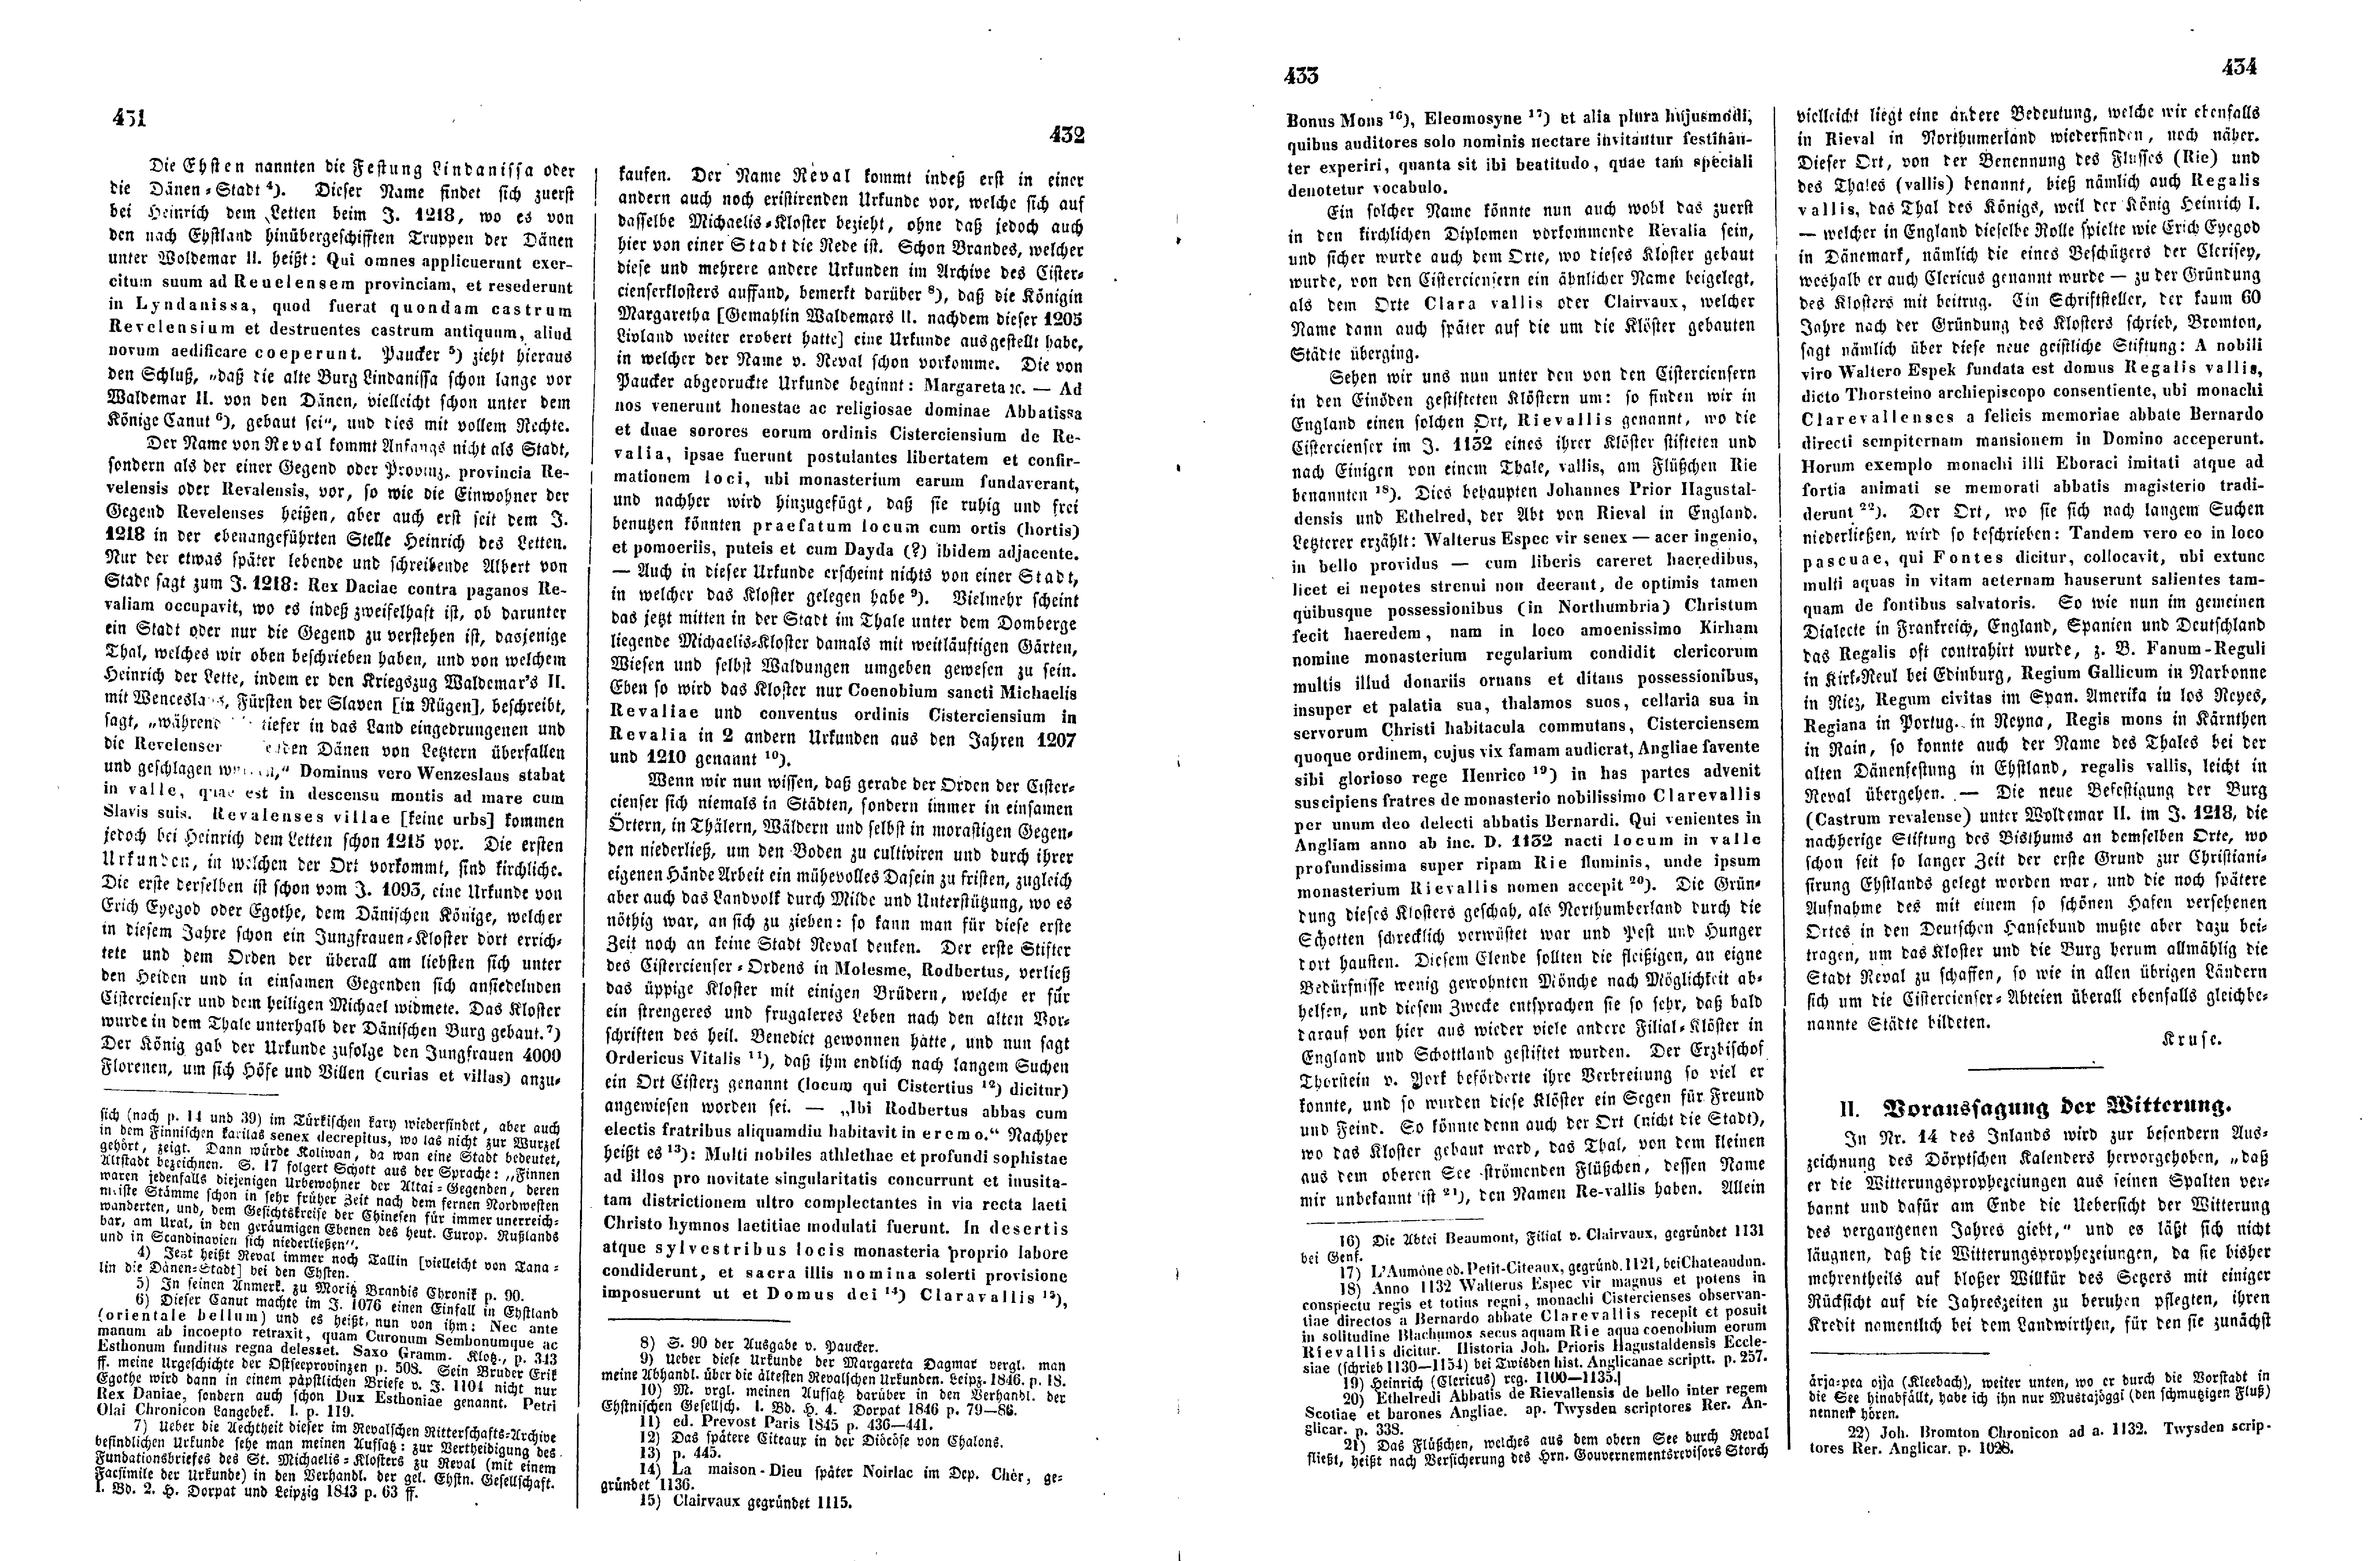 Das Inland [16] (1851) | 112. (431-434) Main body of text